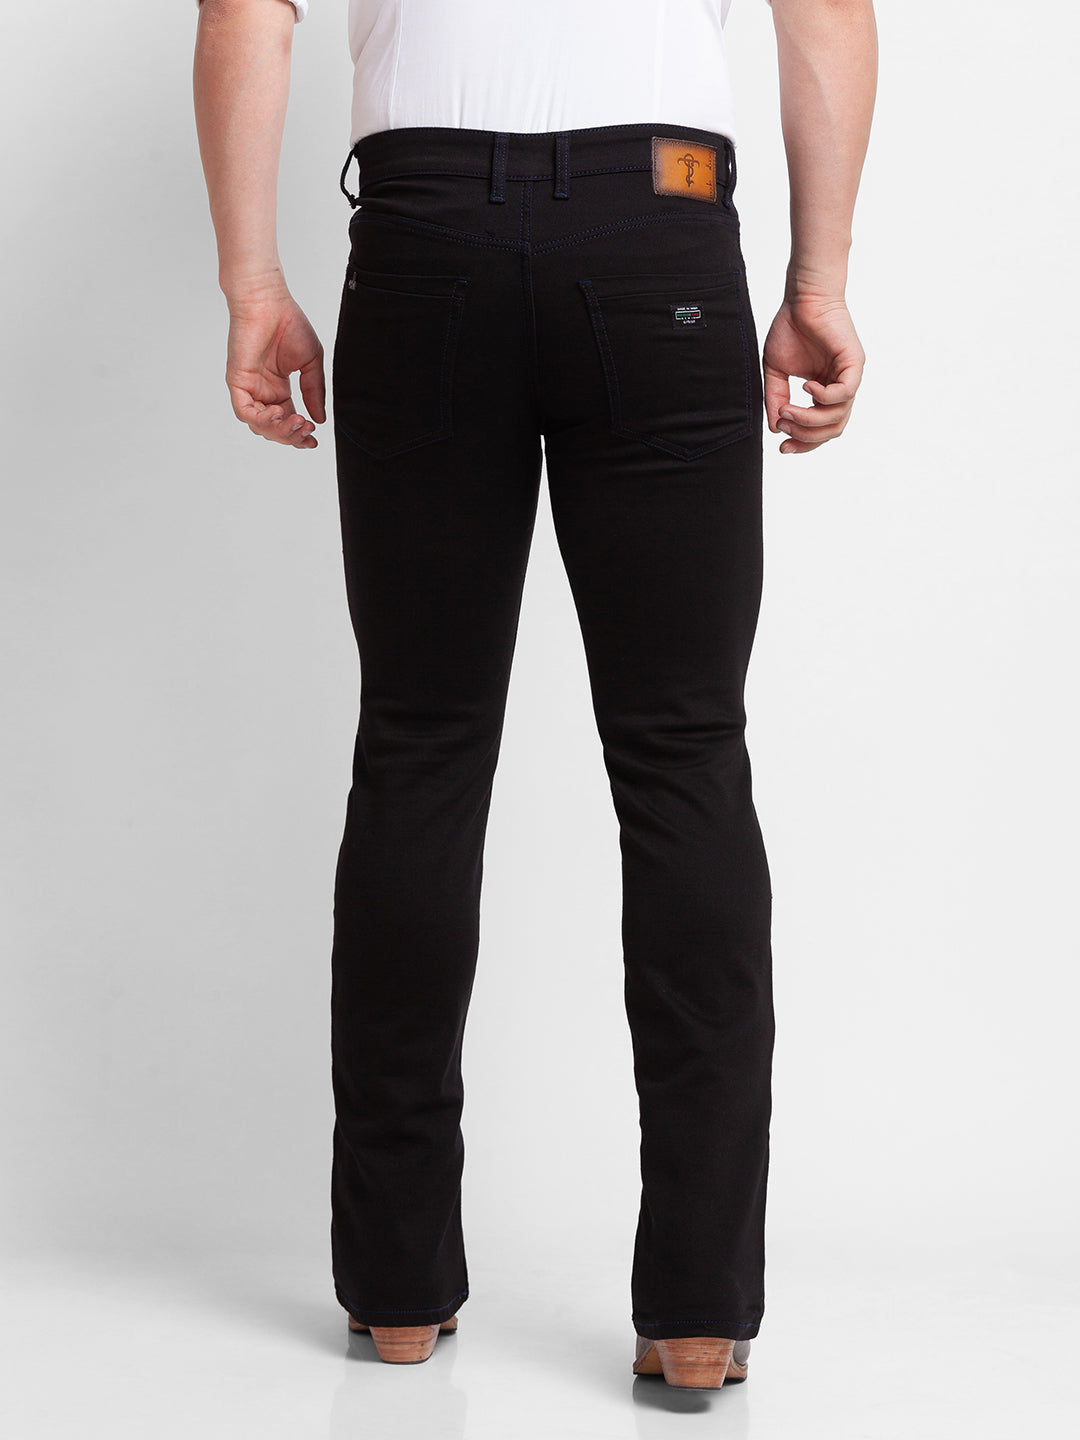 Black Clean Look Bootcut Jeans for Men